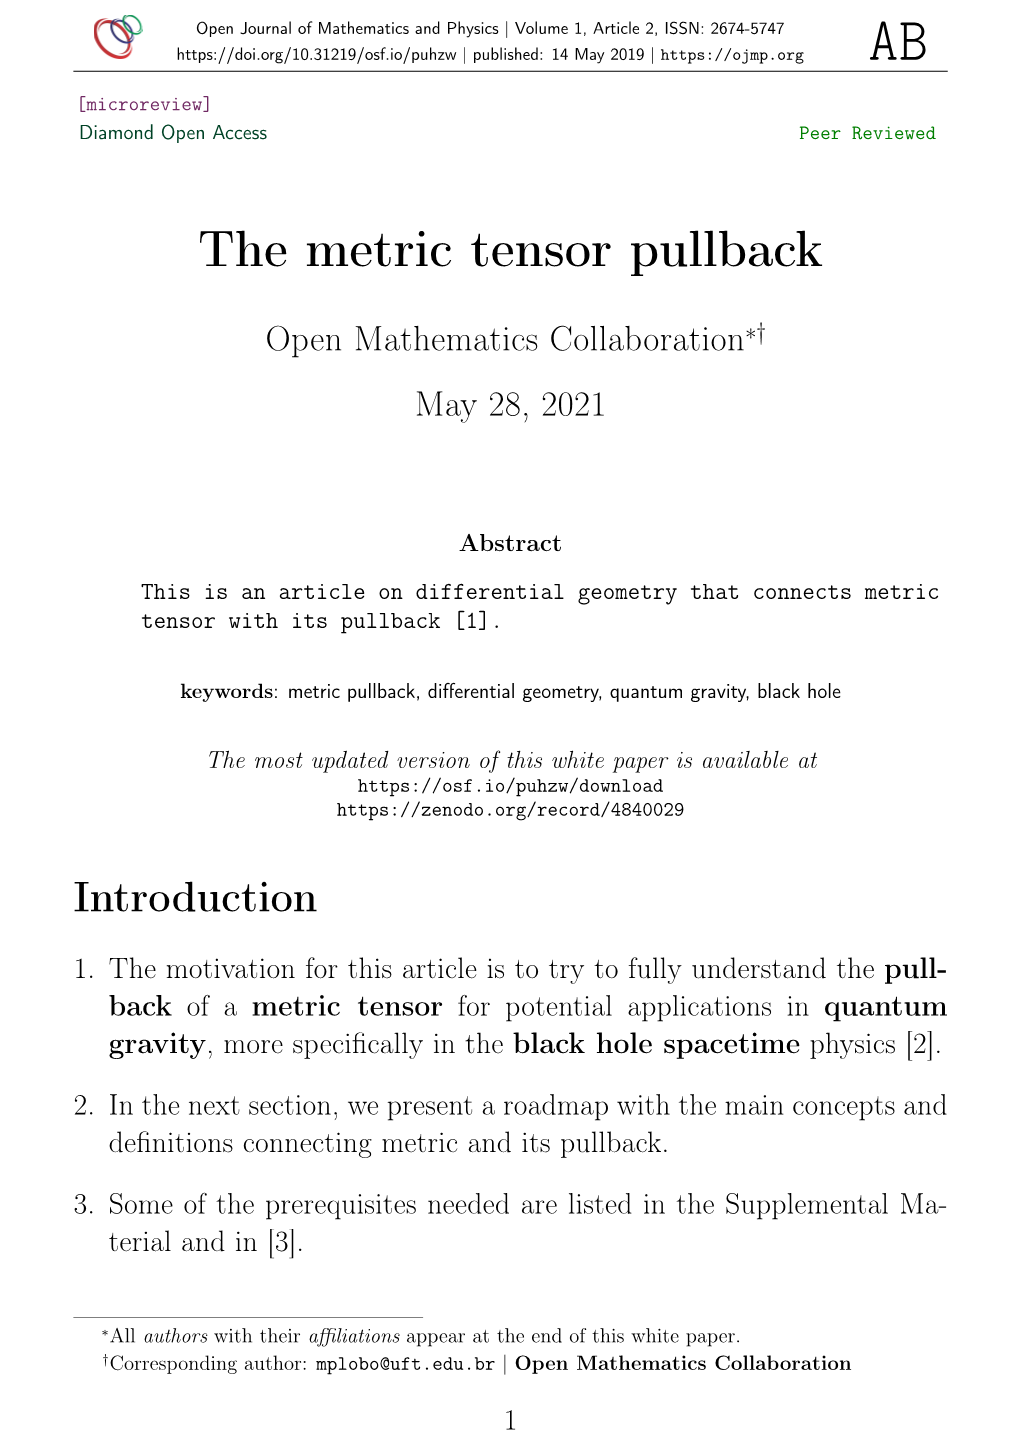 The Metric Tensor Pullback